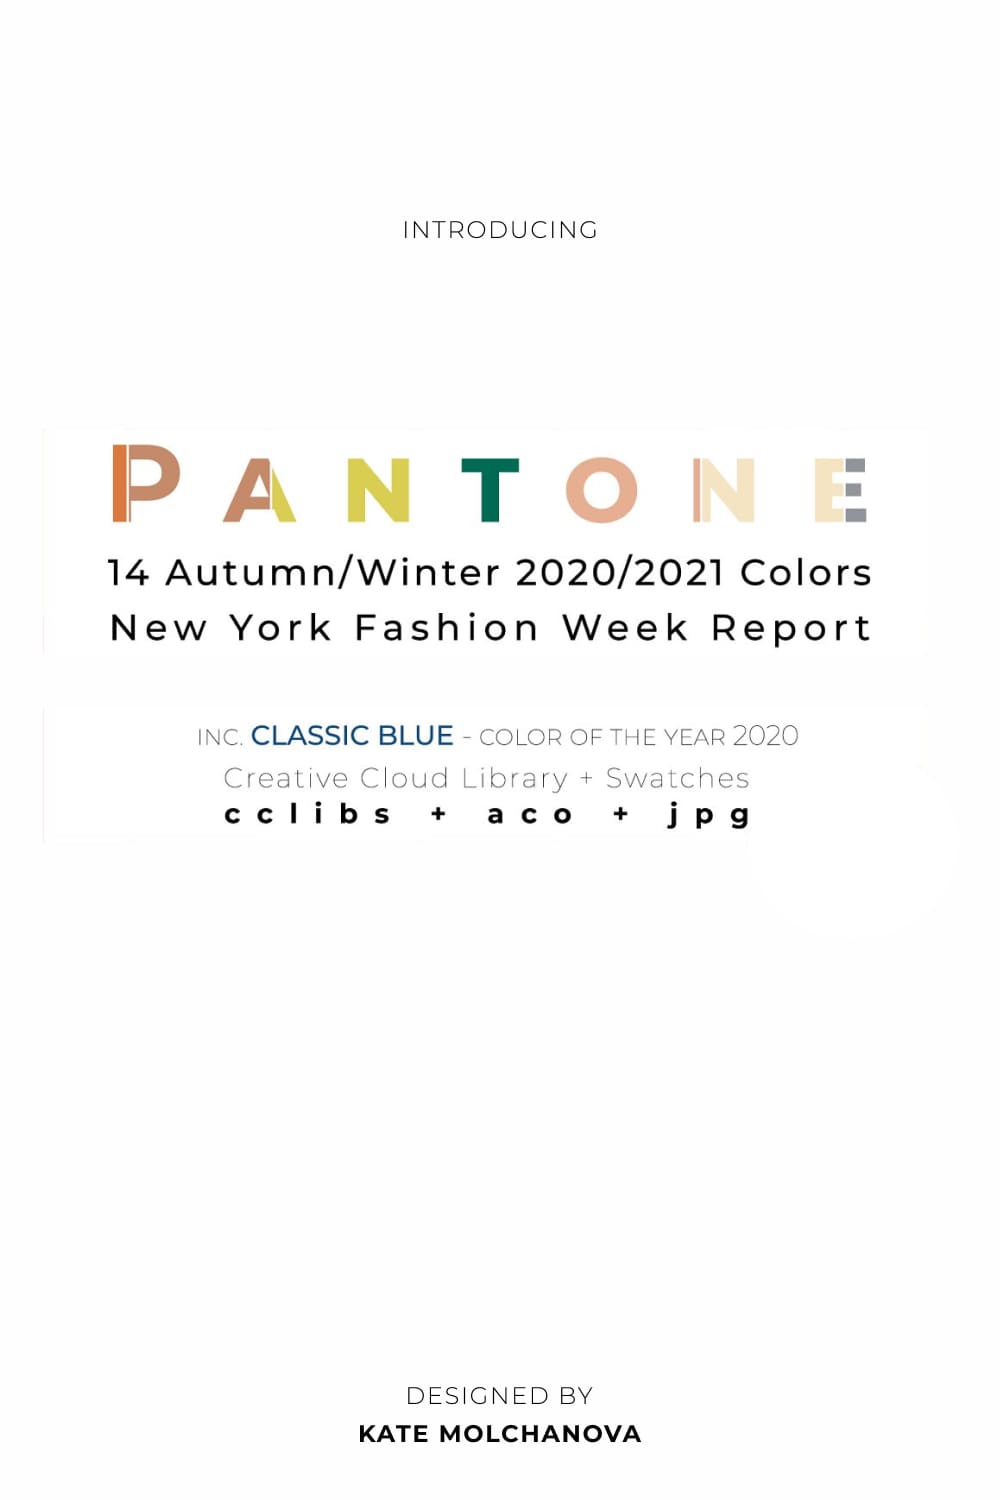 14 pantone nyfw aw 2020 21 palette pinterest image.